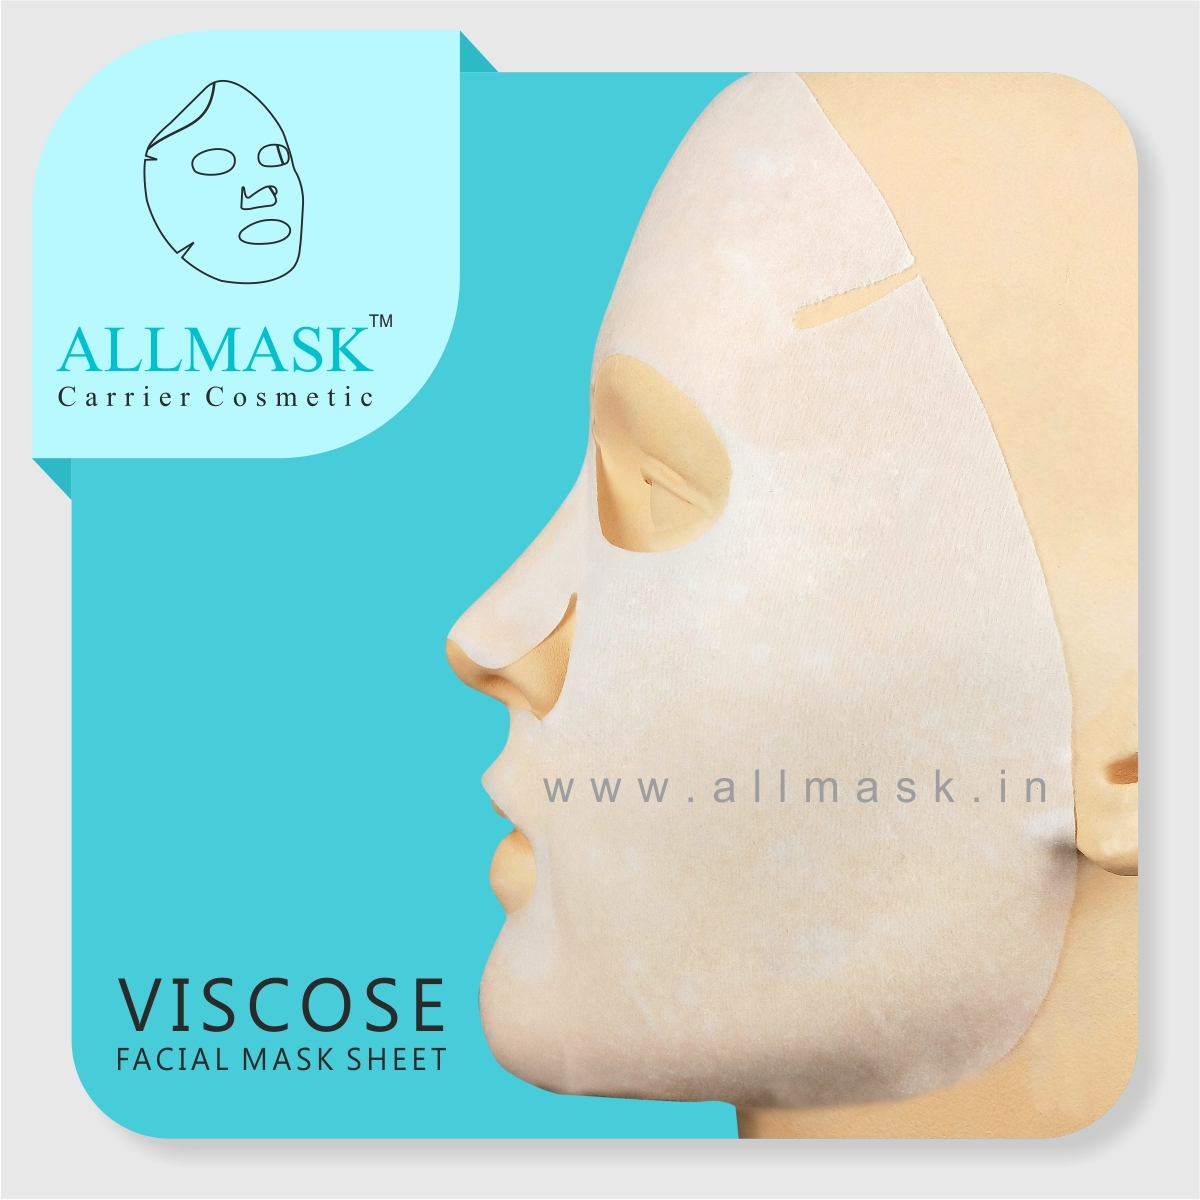 Viscose/Cellulose Facial Mask Sheet - 100% Original - ODM/OEM Customization Available